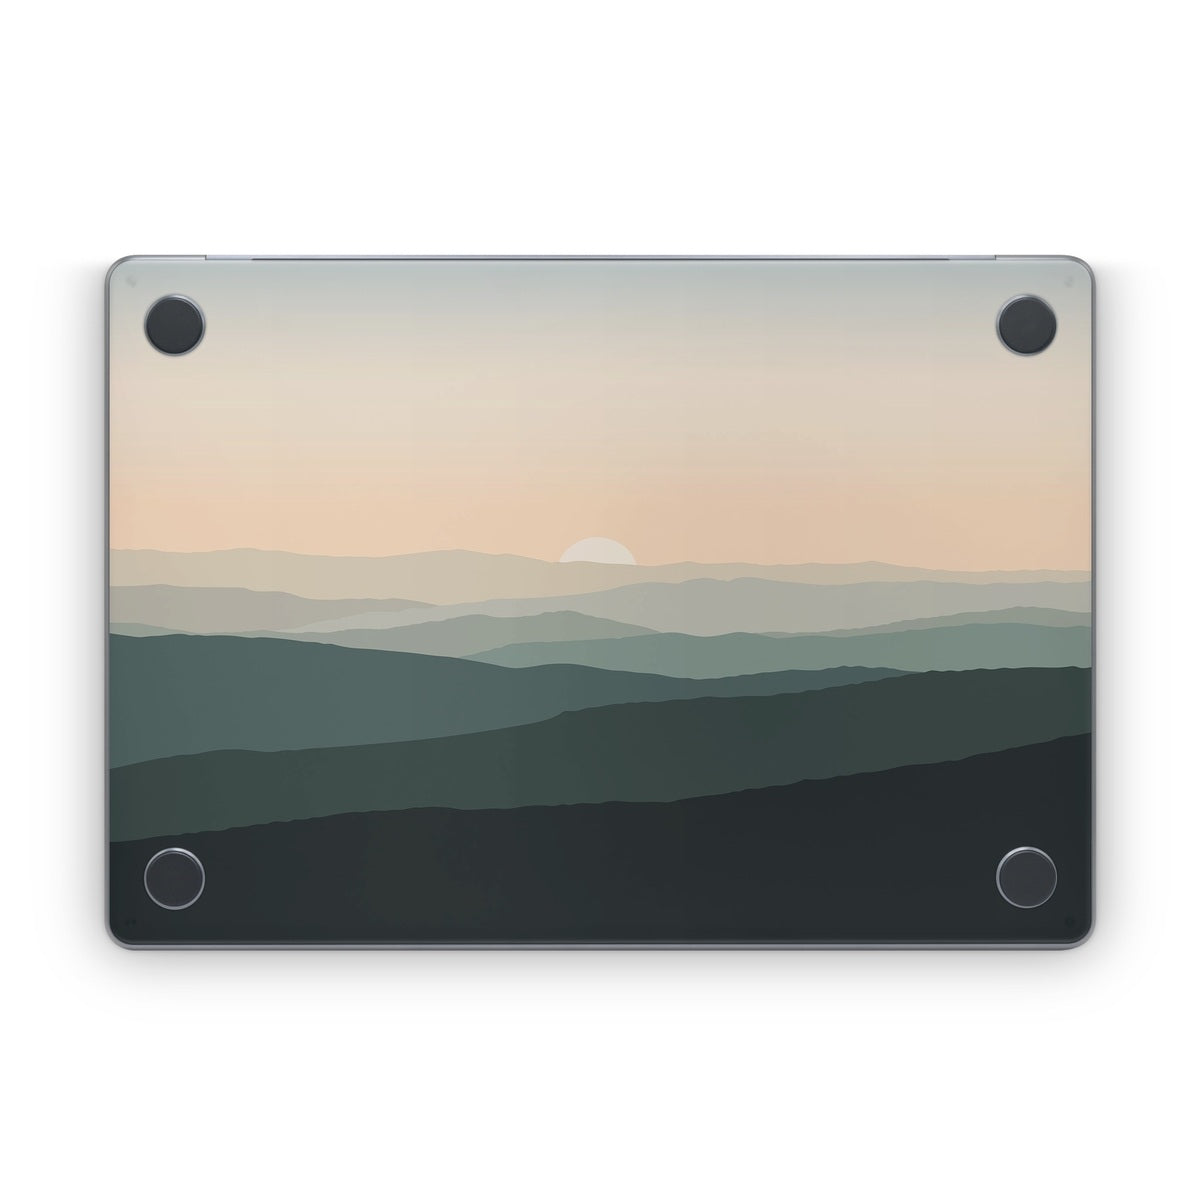 Interval - Apple MacBook Skin